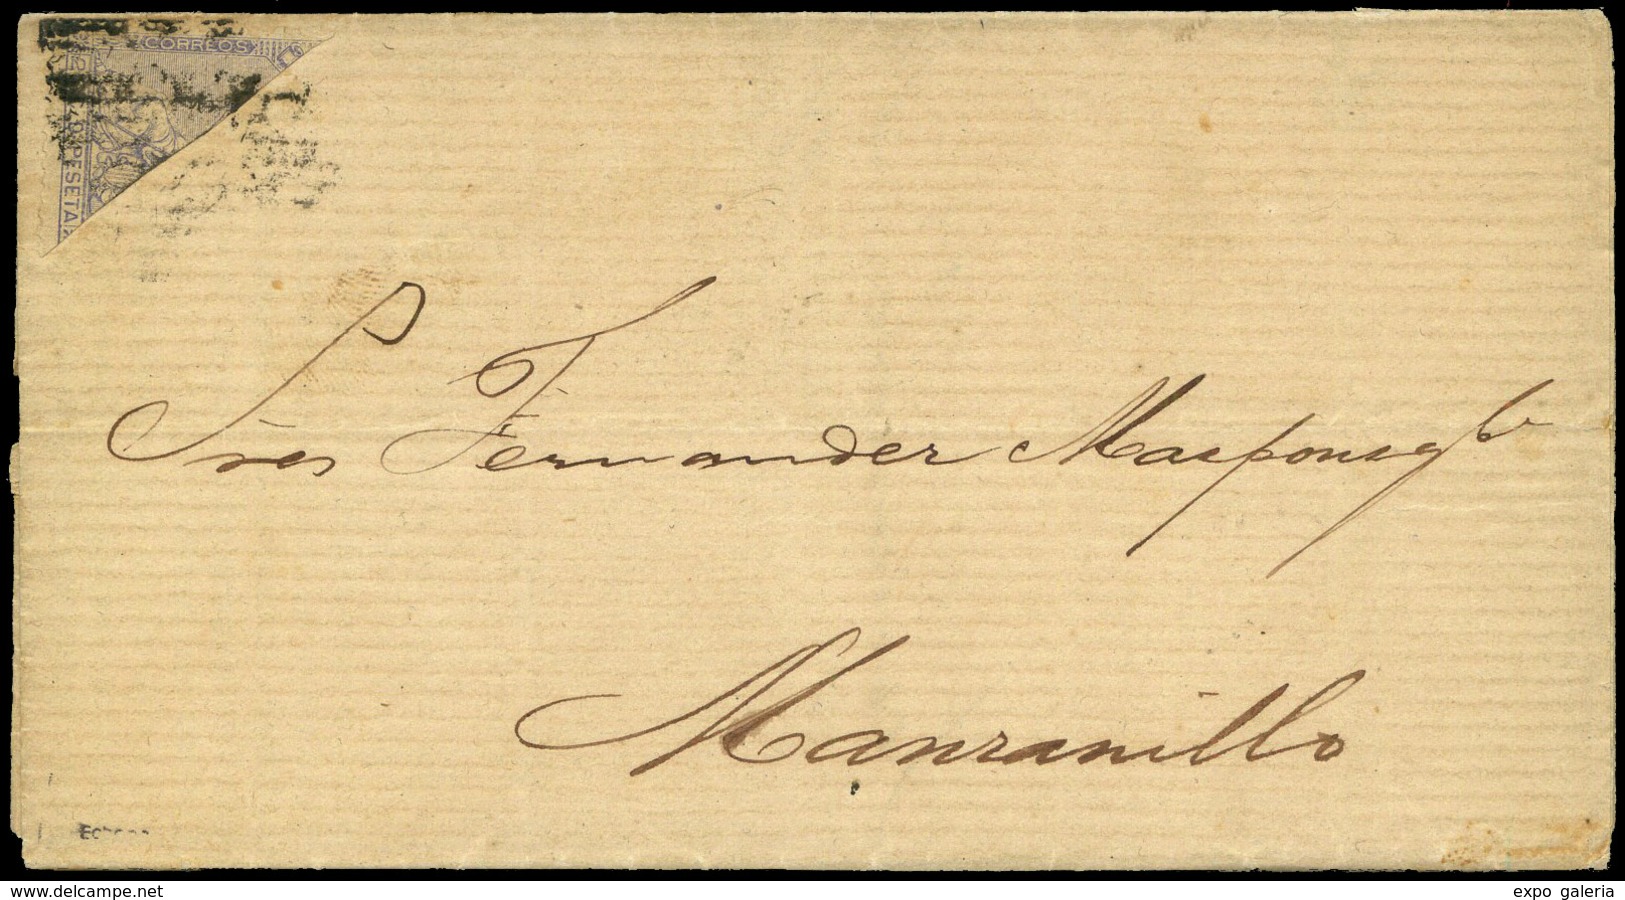 1061 Ed. 22 Bisec - 1874. Carta Cda Con Bisectado, De La Habana A Manzanillo Con Bonito Texto Impreso. Lujo - Cuba (1874-1898)